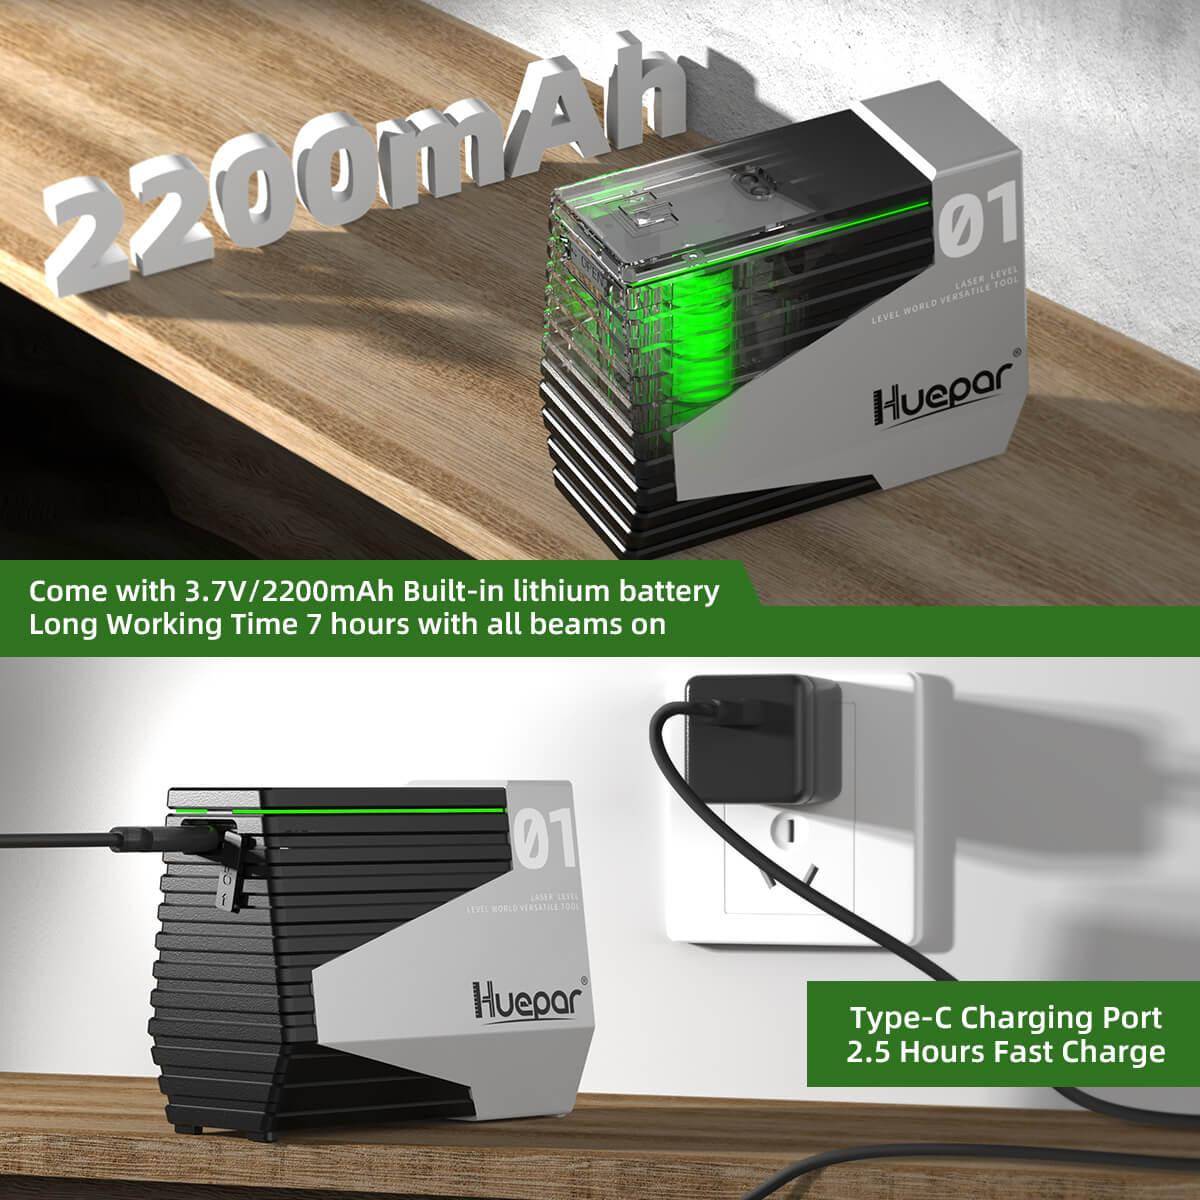 Huepar E011G - Green Beam Cross Line Self-leveling Laser Levels Tool with Motion Sensor & Li-ion Battery - HUEPAR UK